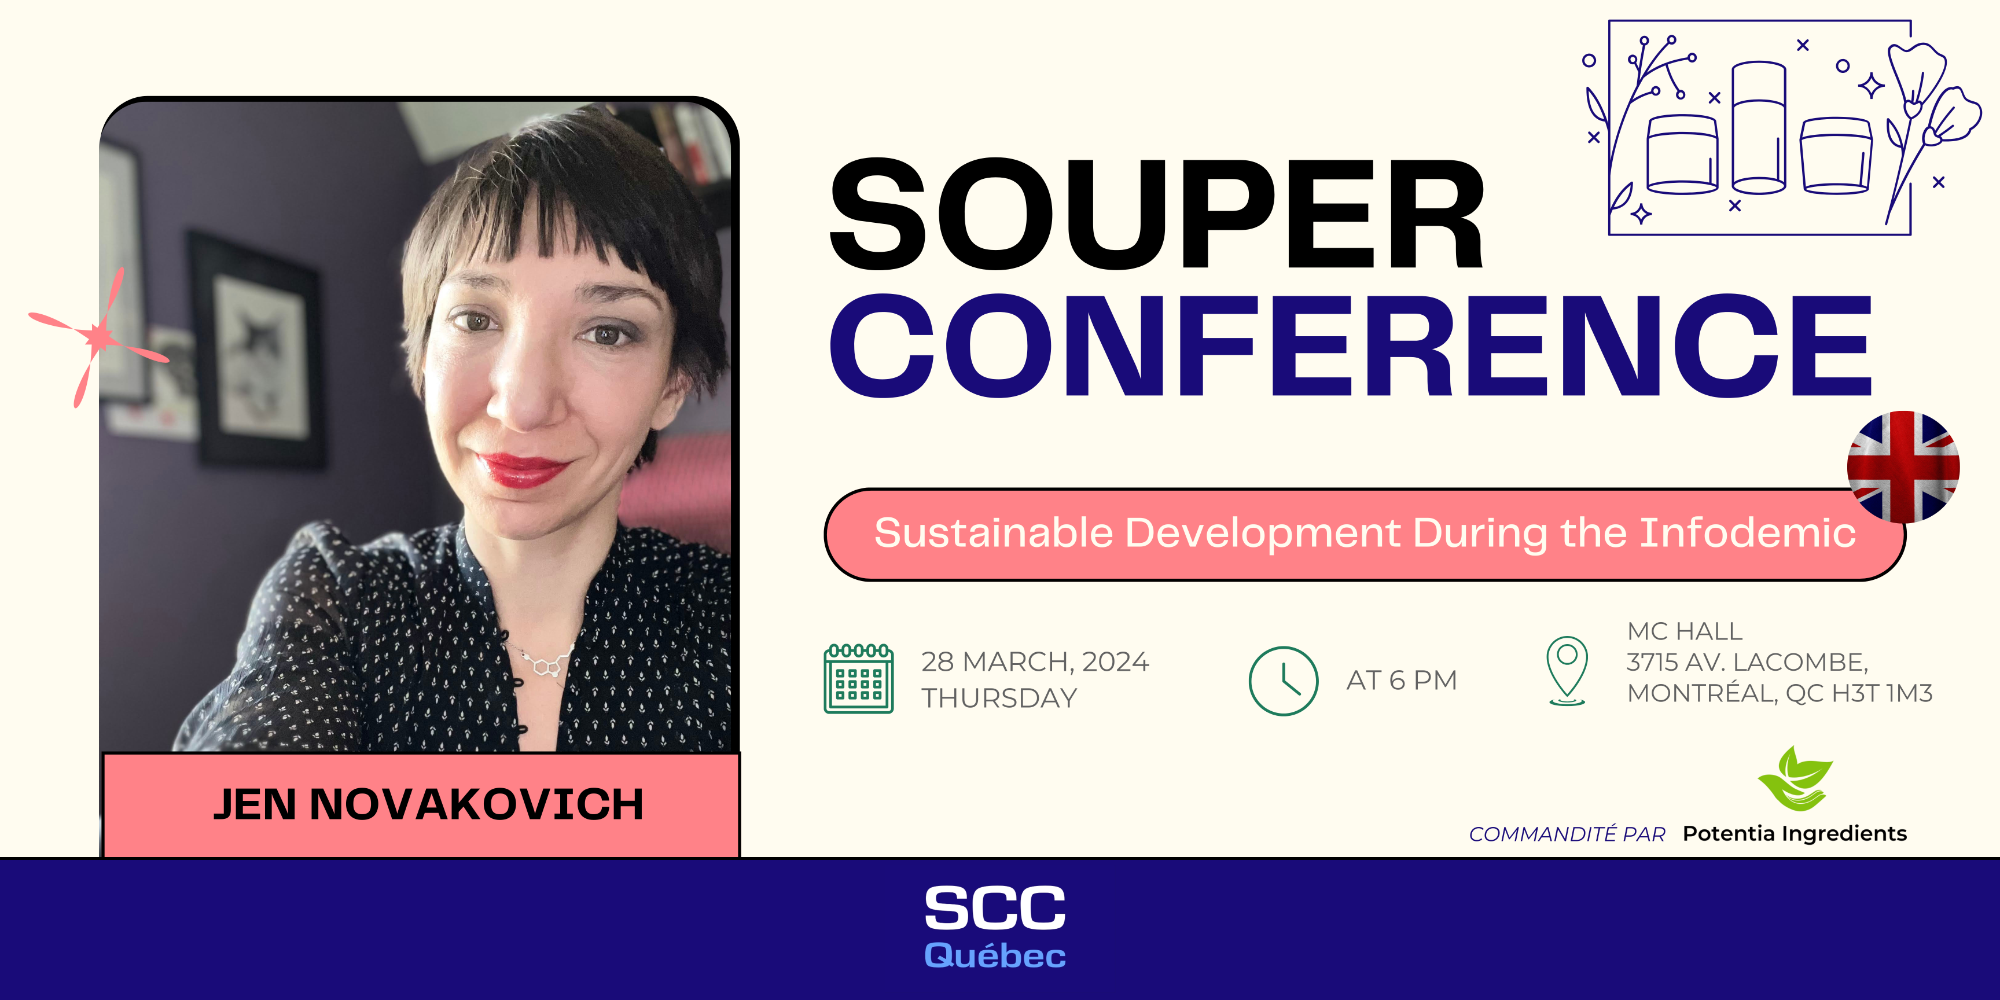 SCC Souper Conférence - Sustainable Development During the Infodemic, Jennifer Novakovich